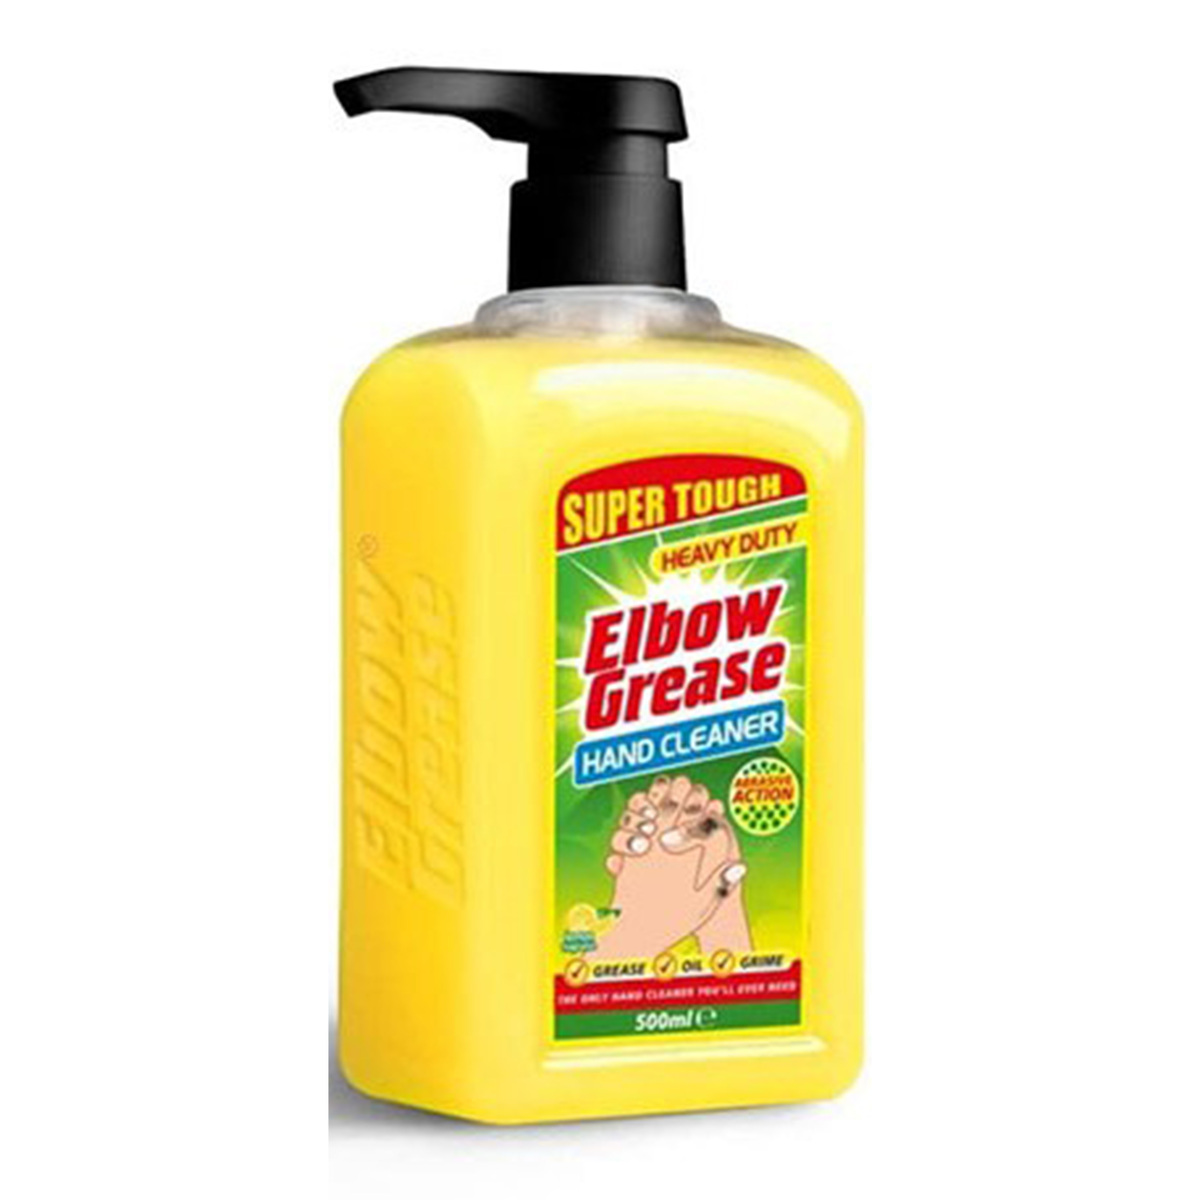 Joyces Hardware & Home. Elbow Grease Hand Cleaner Heavy Duty Lemon